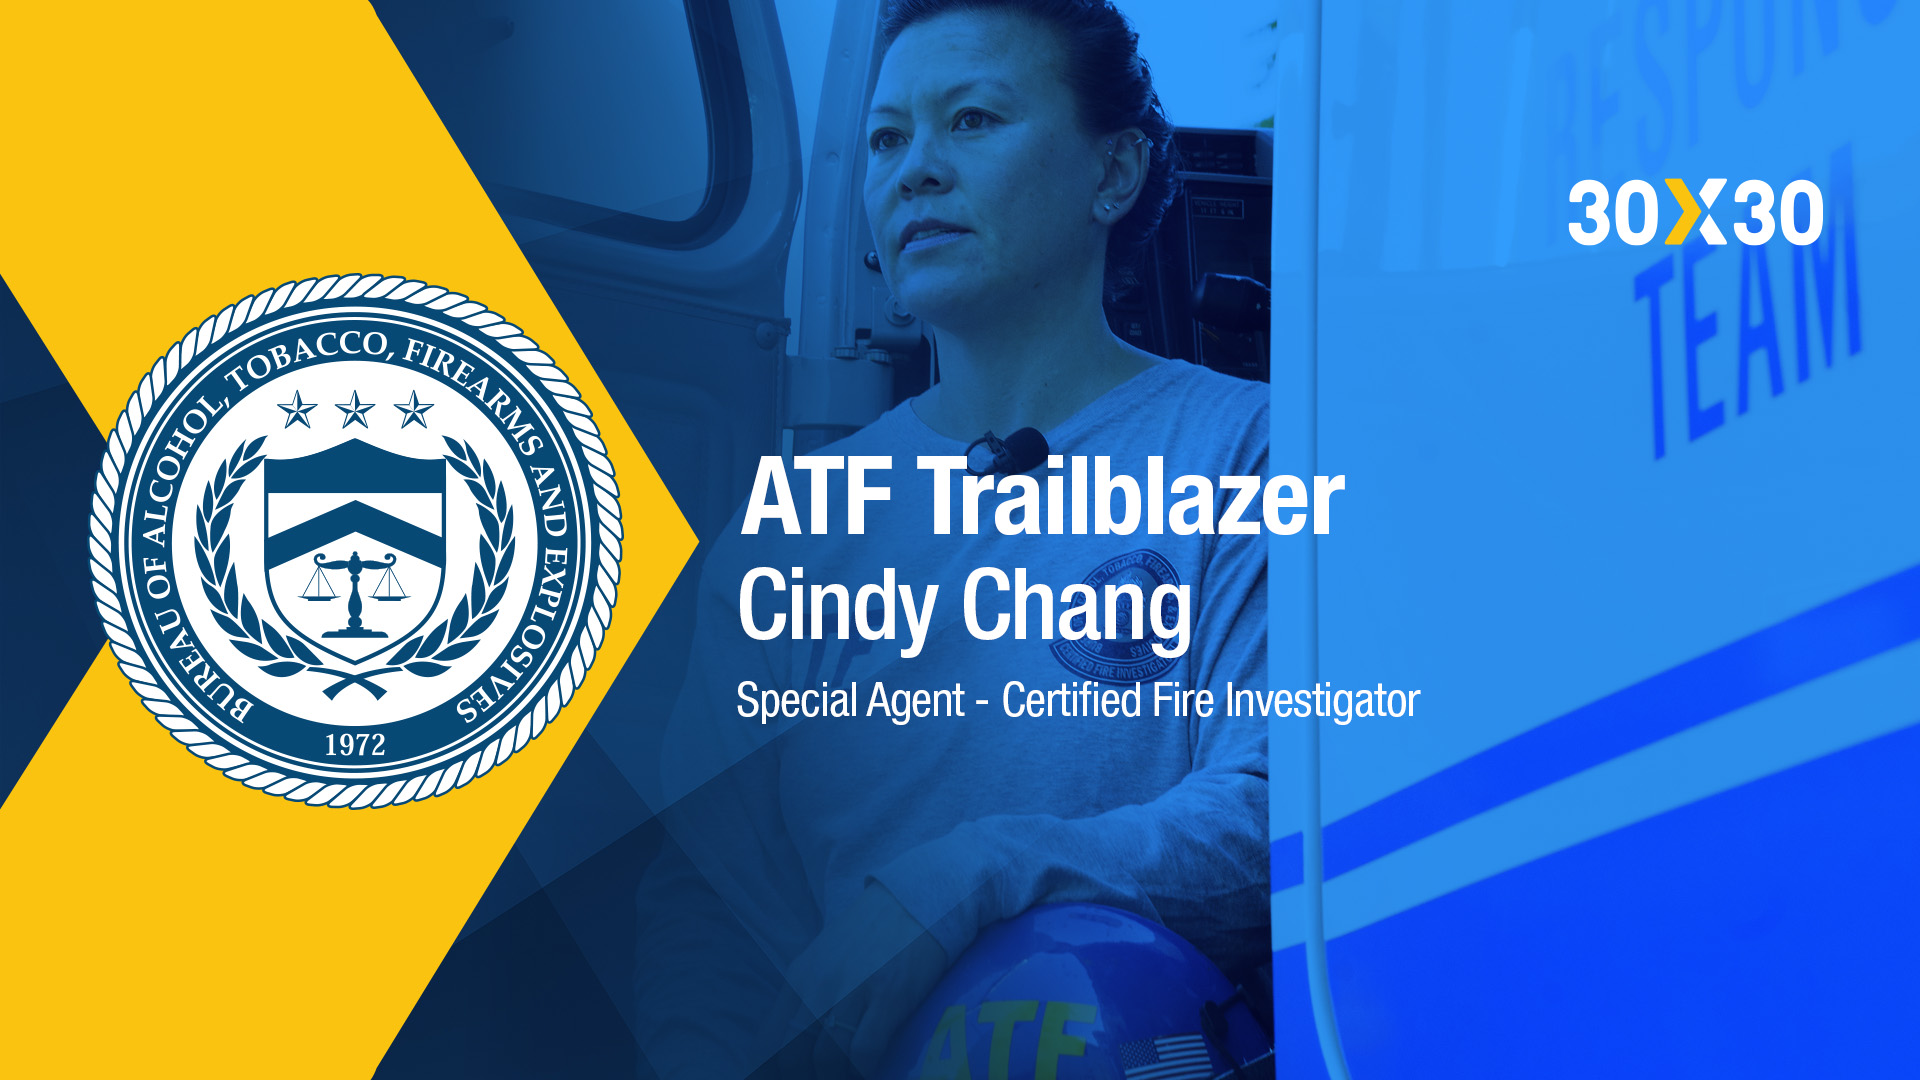 ATF Trailblazer Cindy Chang